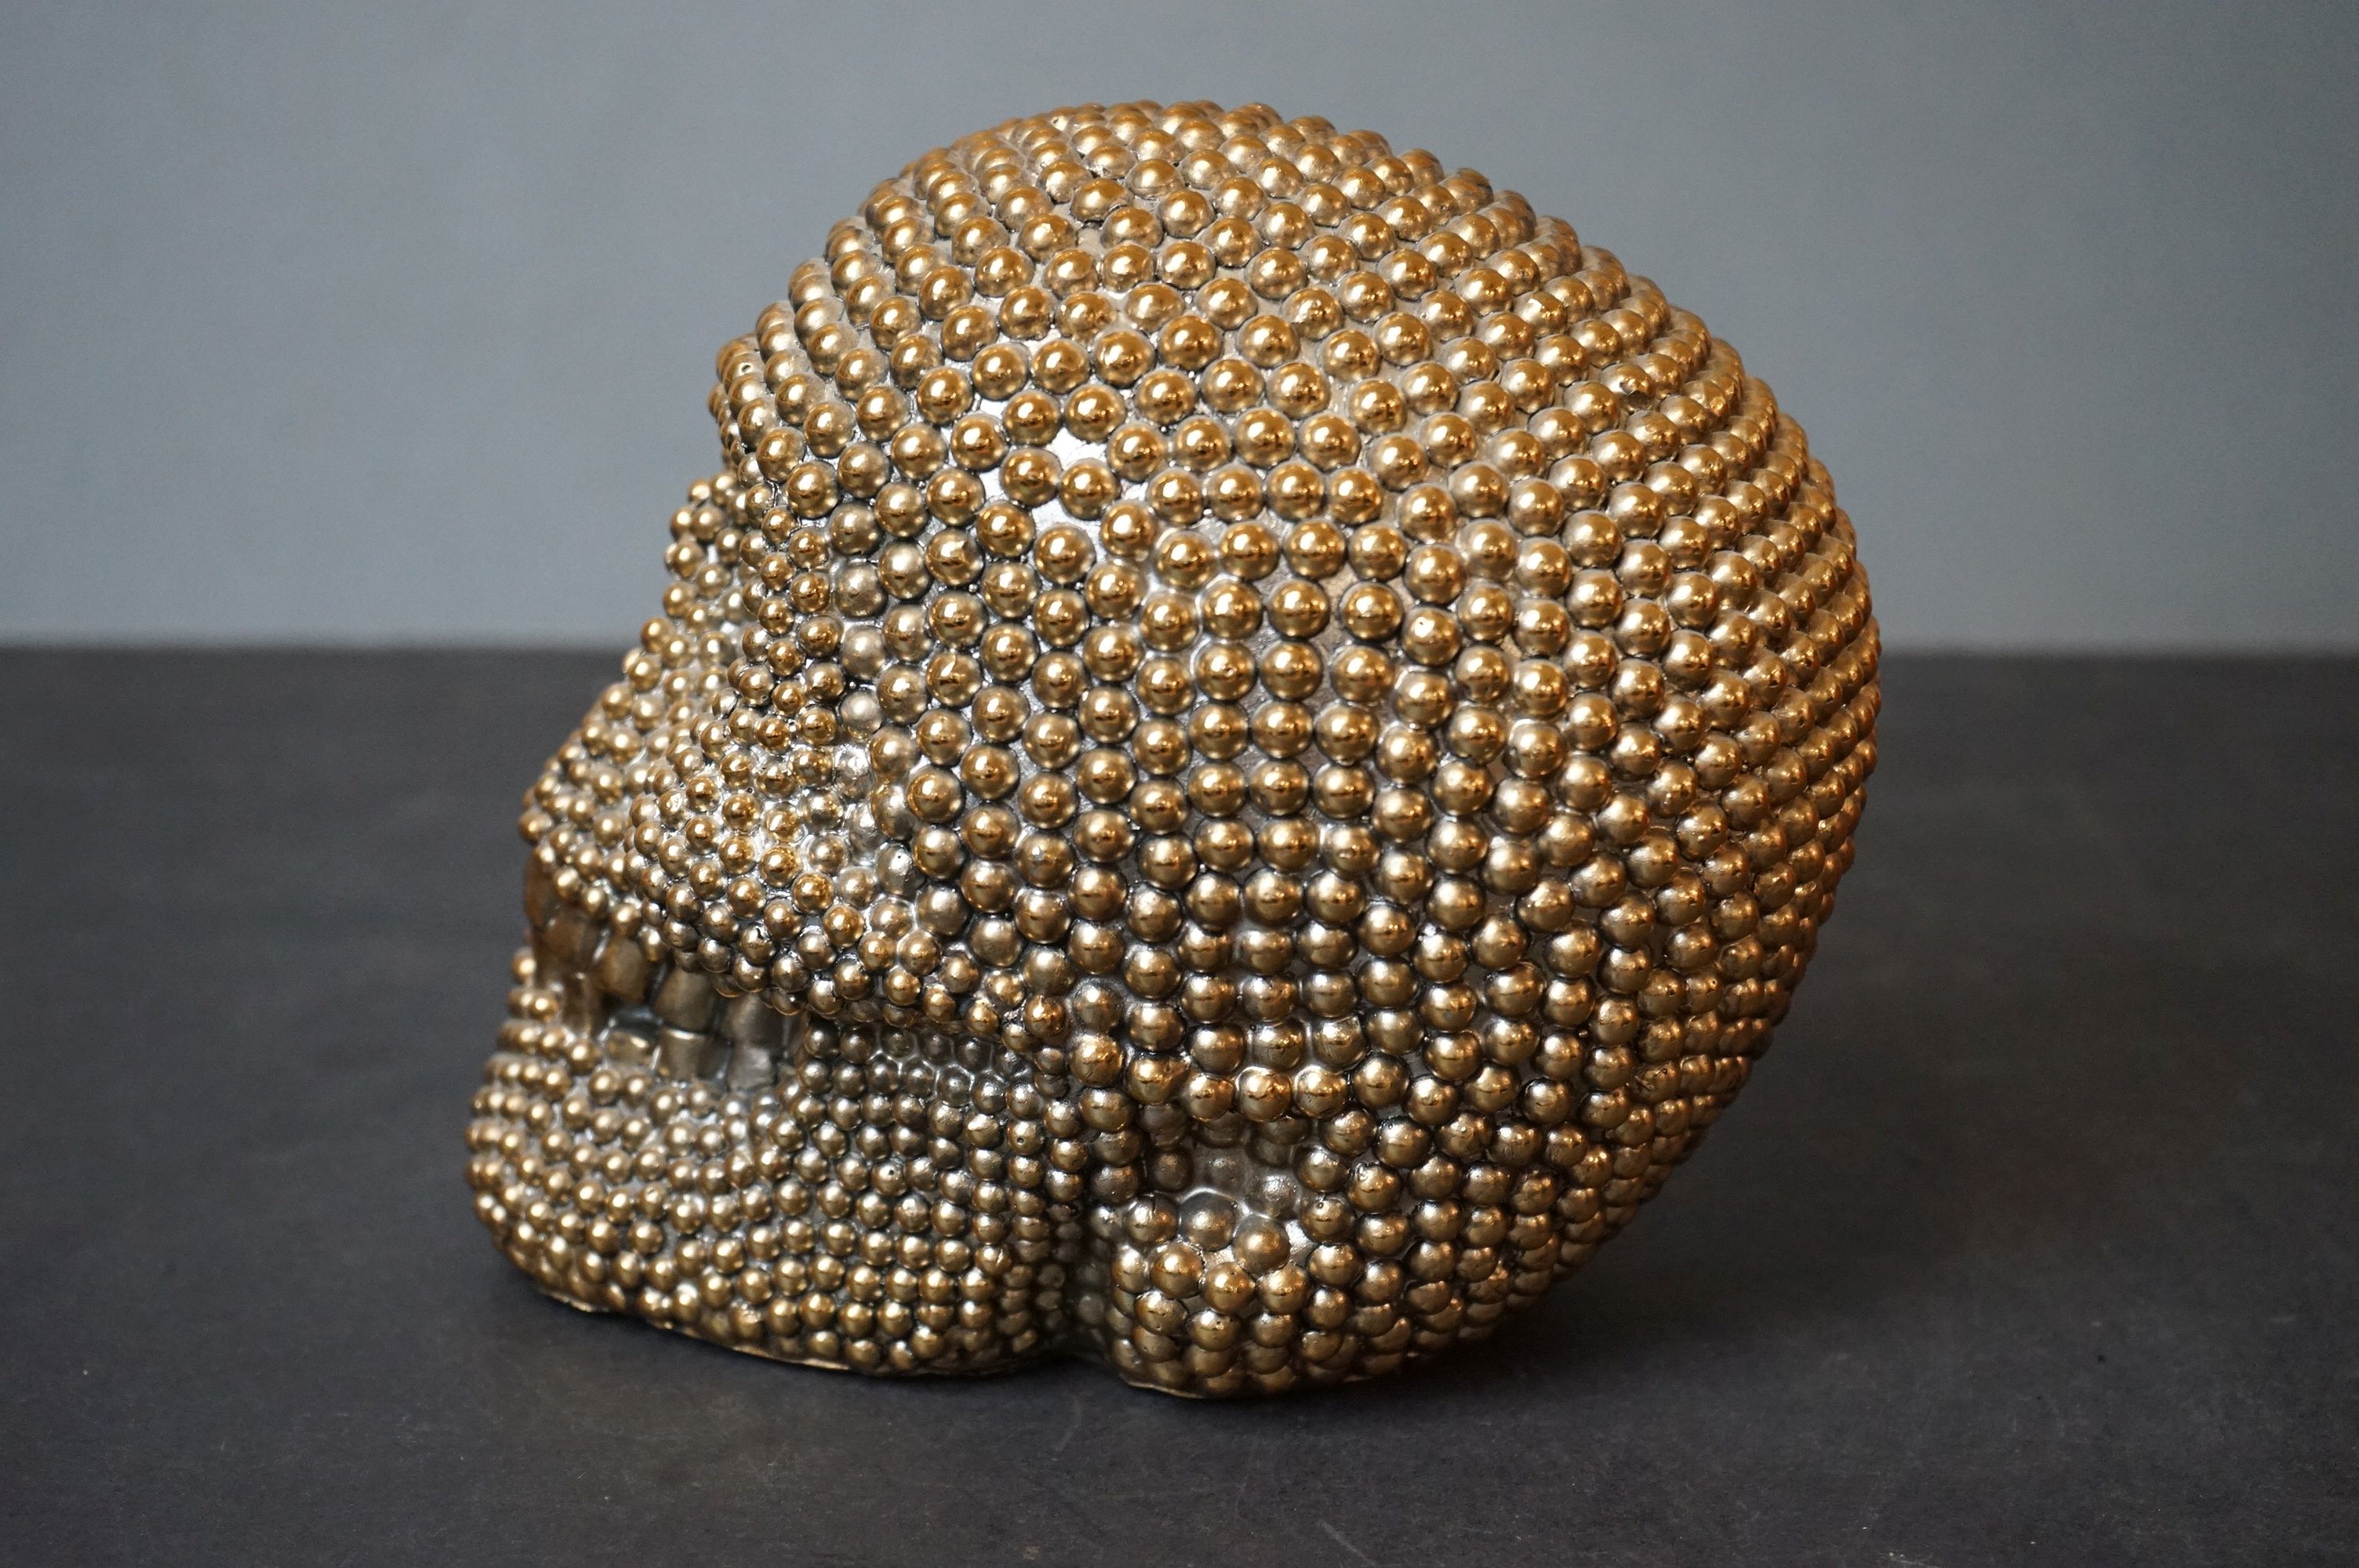 A decorative resin Golden skull ornament. - Image 2 of 4